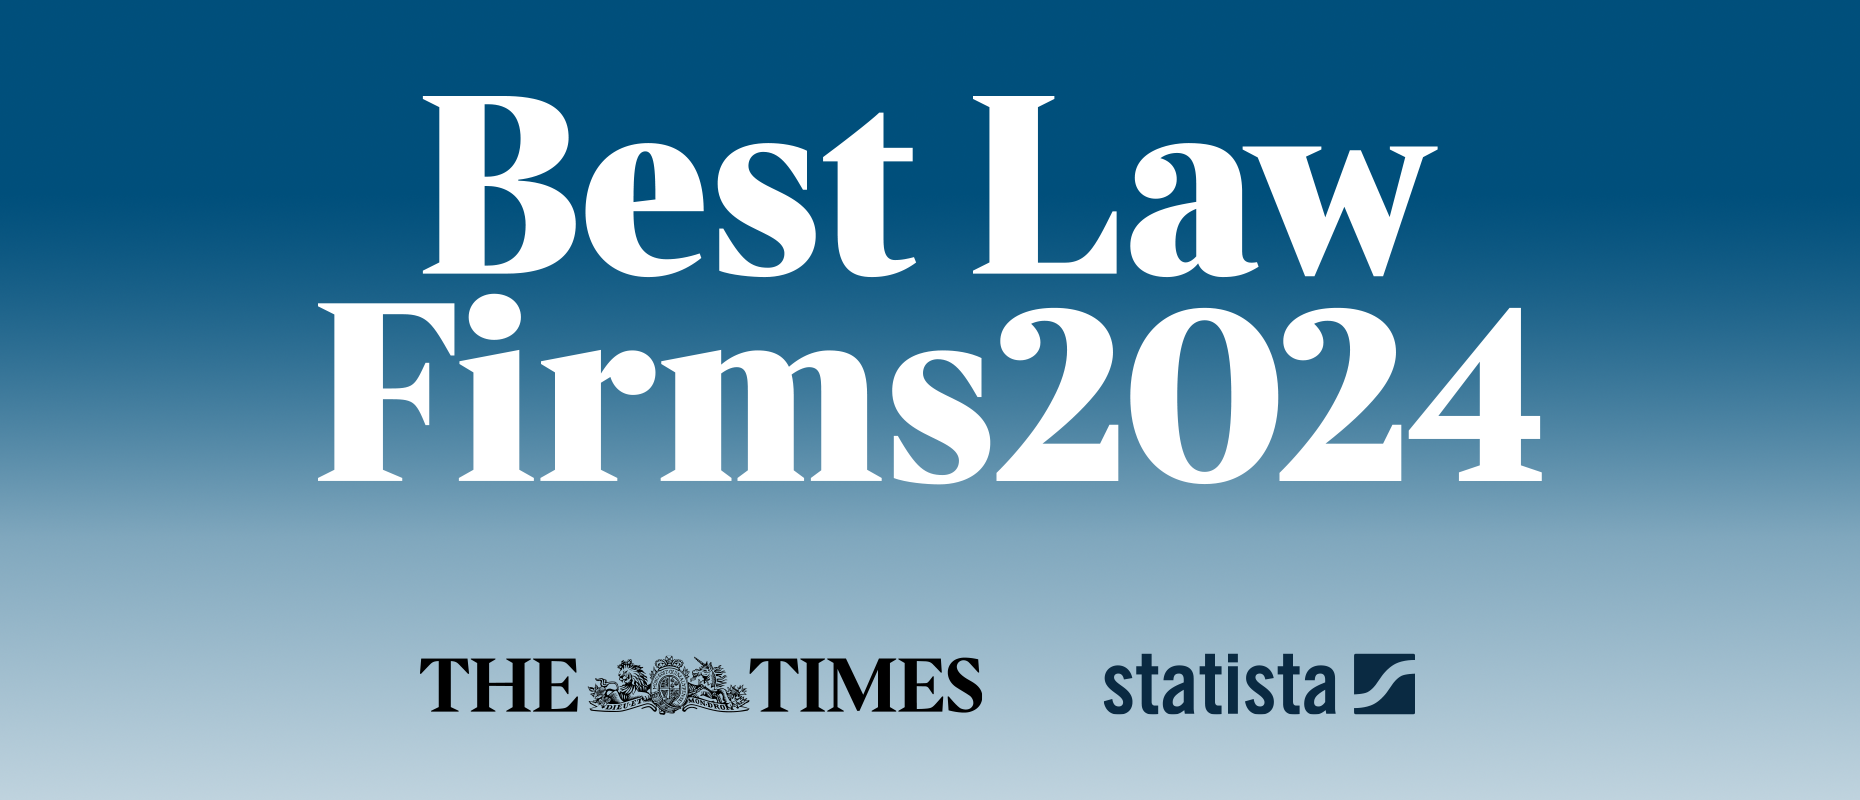 Best Law Firms 2024 Award